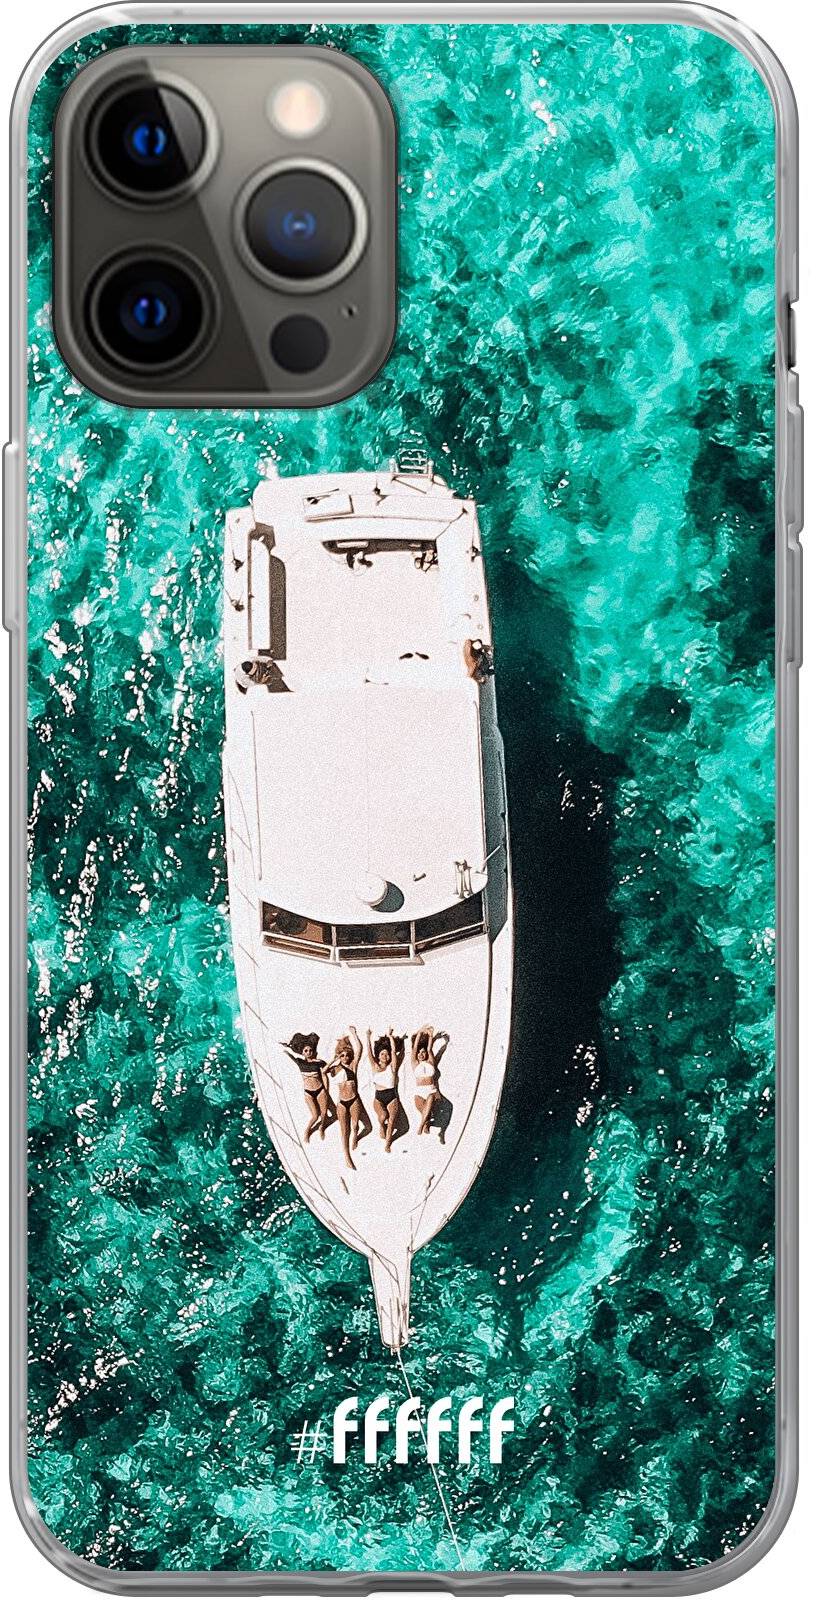 Yacht Life iPhone 12 Pro Max